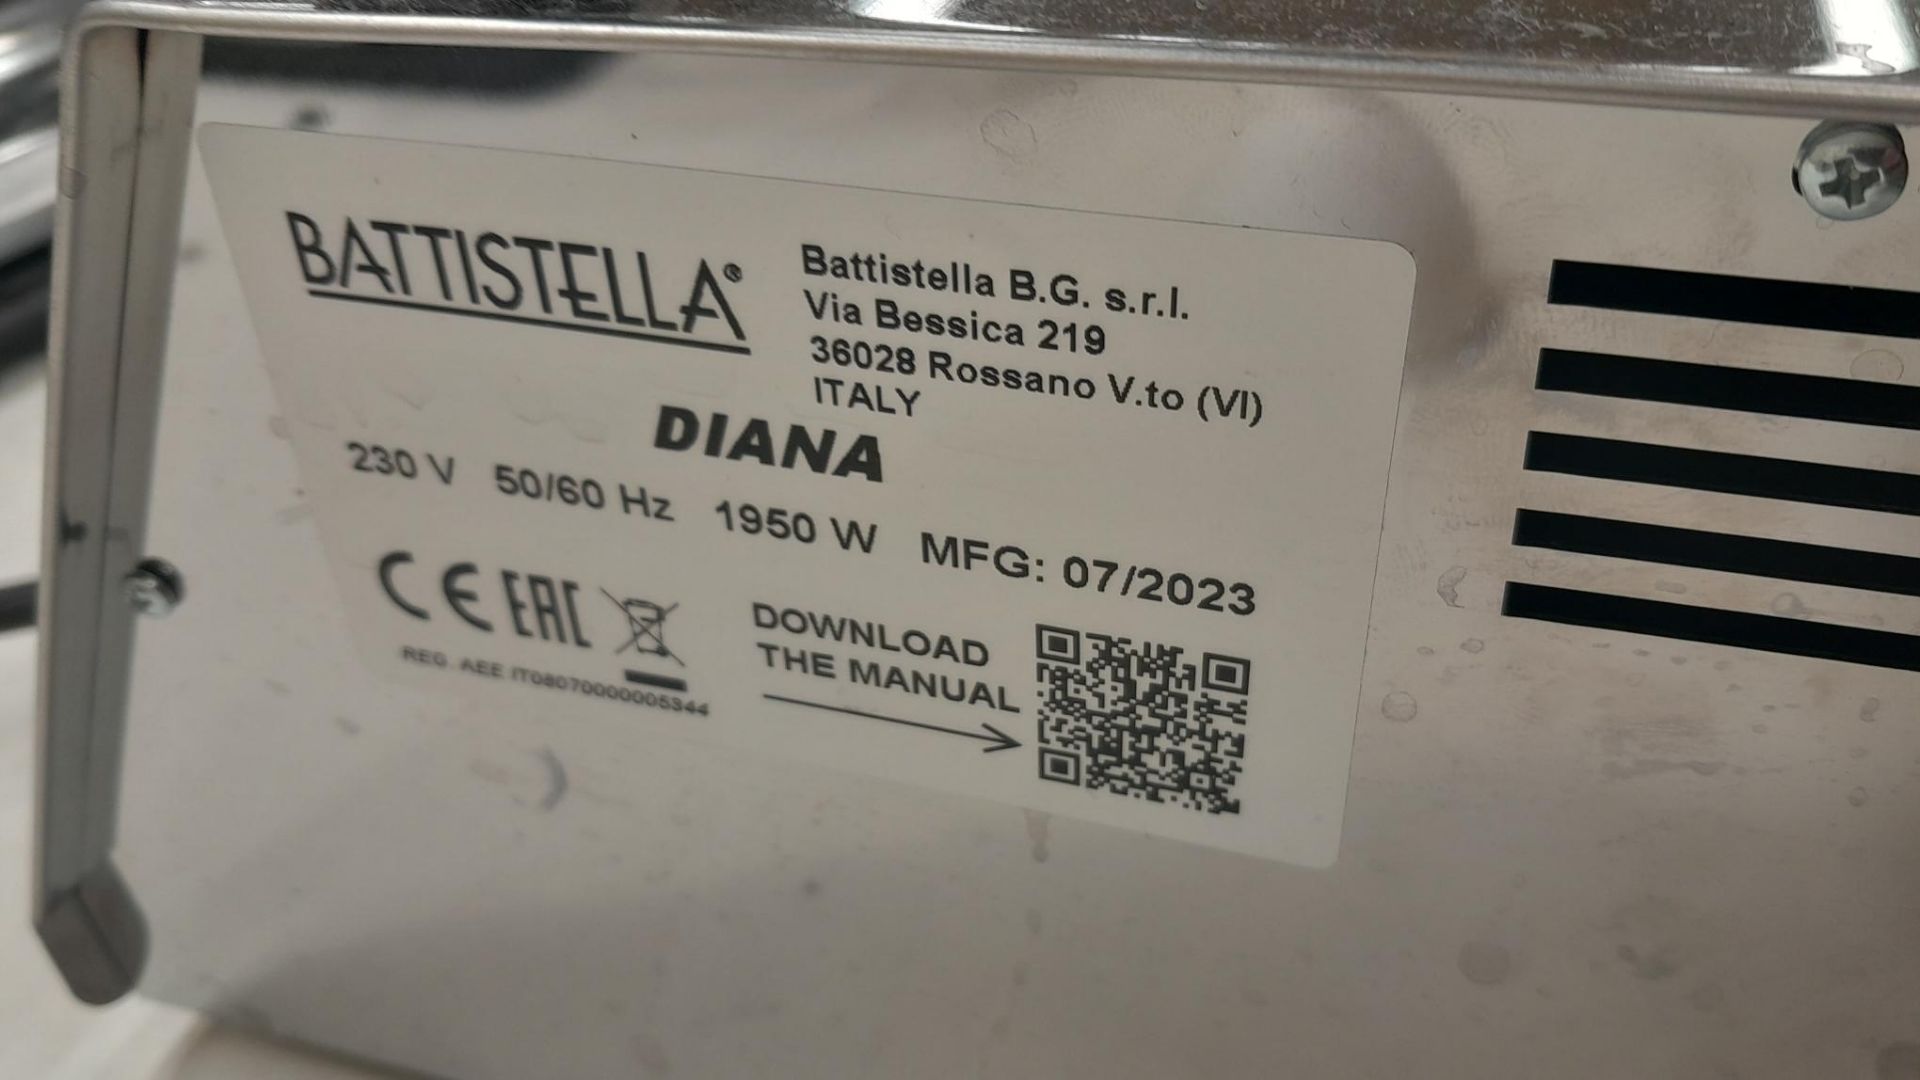 Batistella Diana cloth steamer, 240v - Image 3 of 3